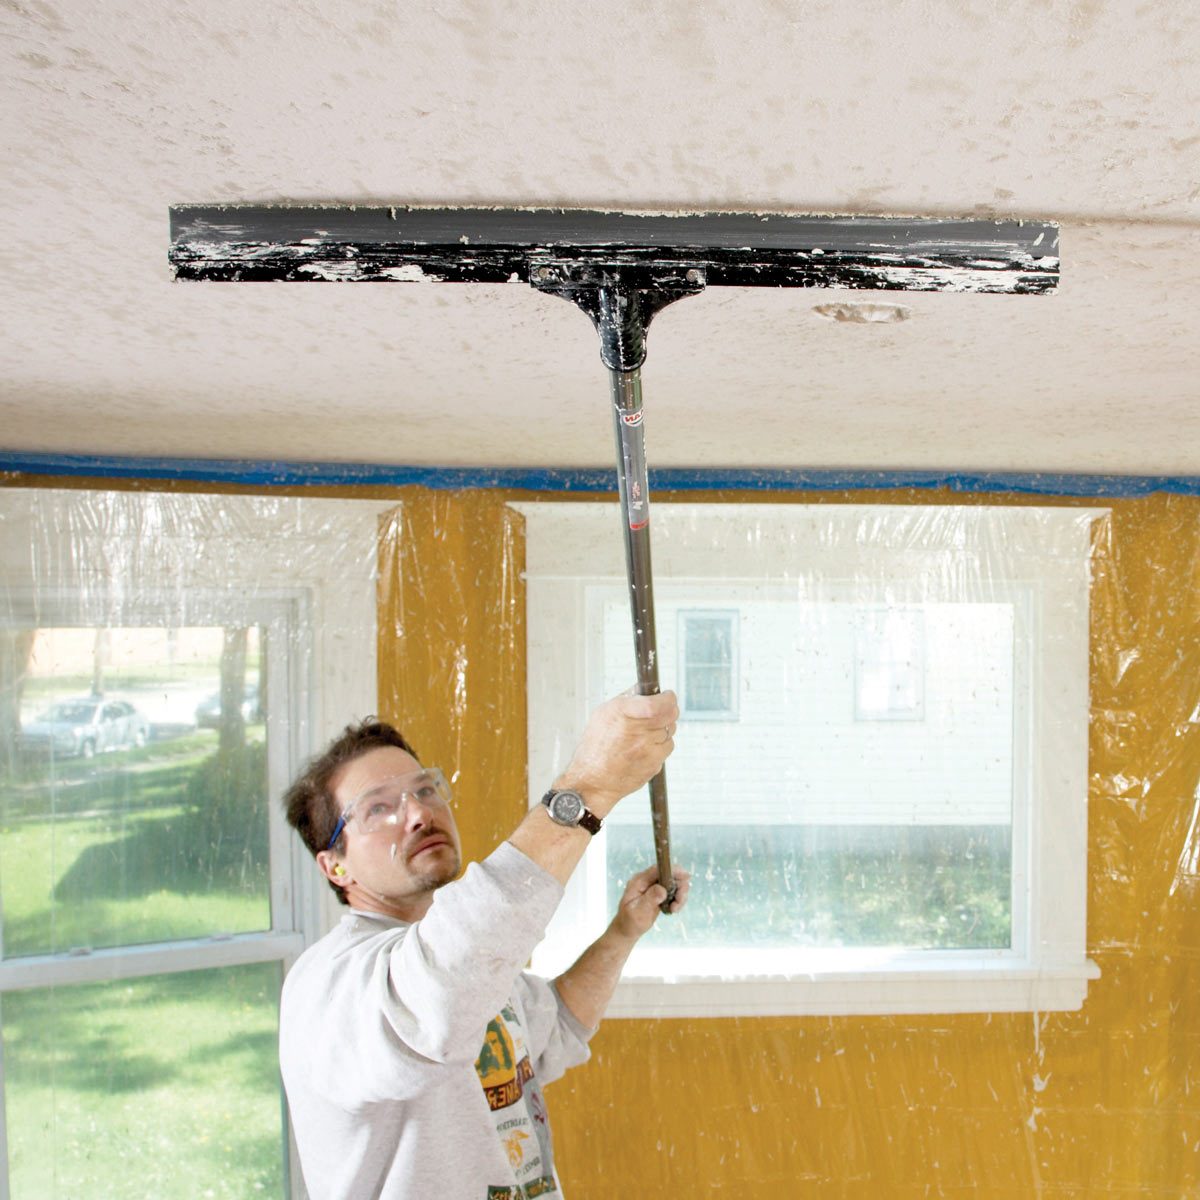 How To Apply Knock Down Wall Texture Diy Family Handyman